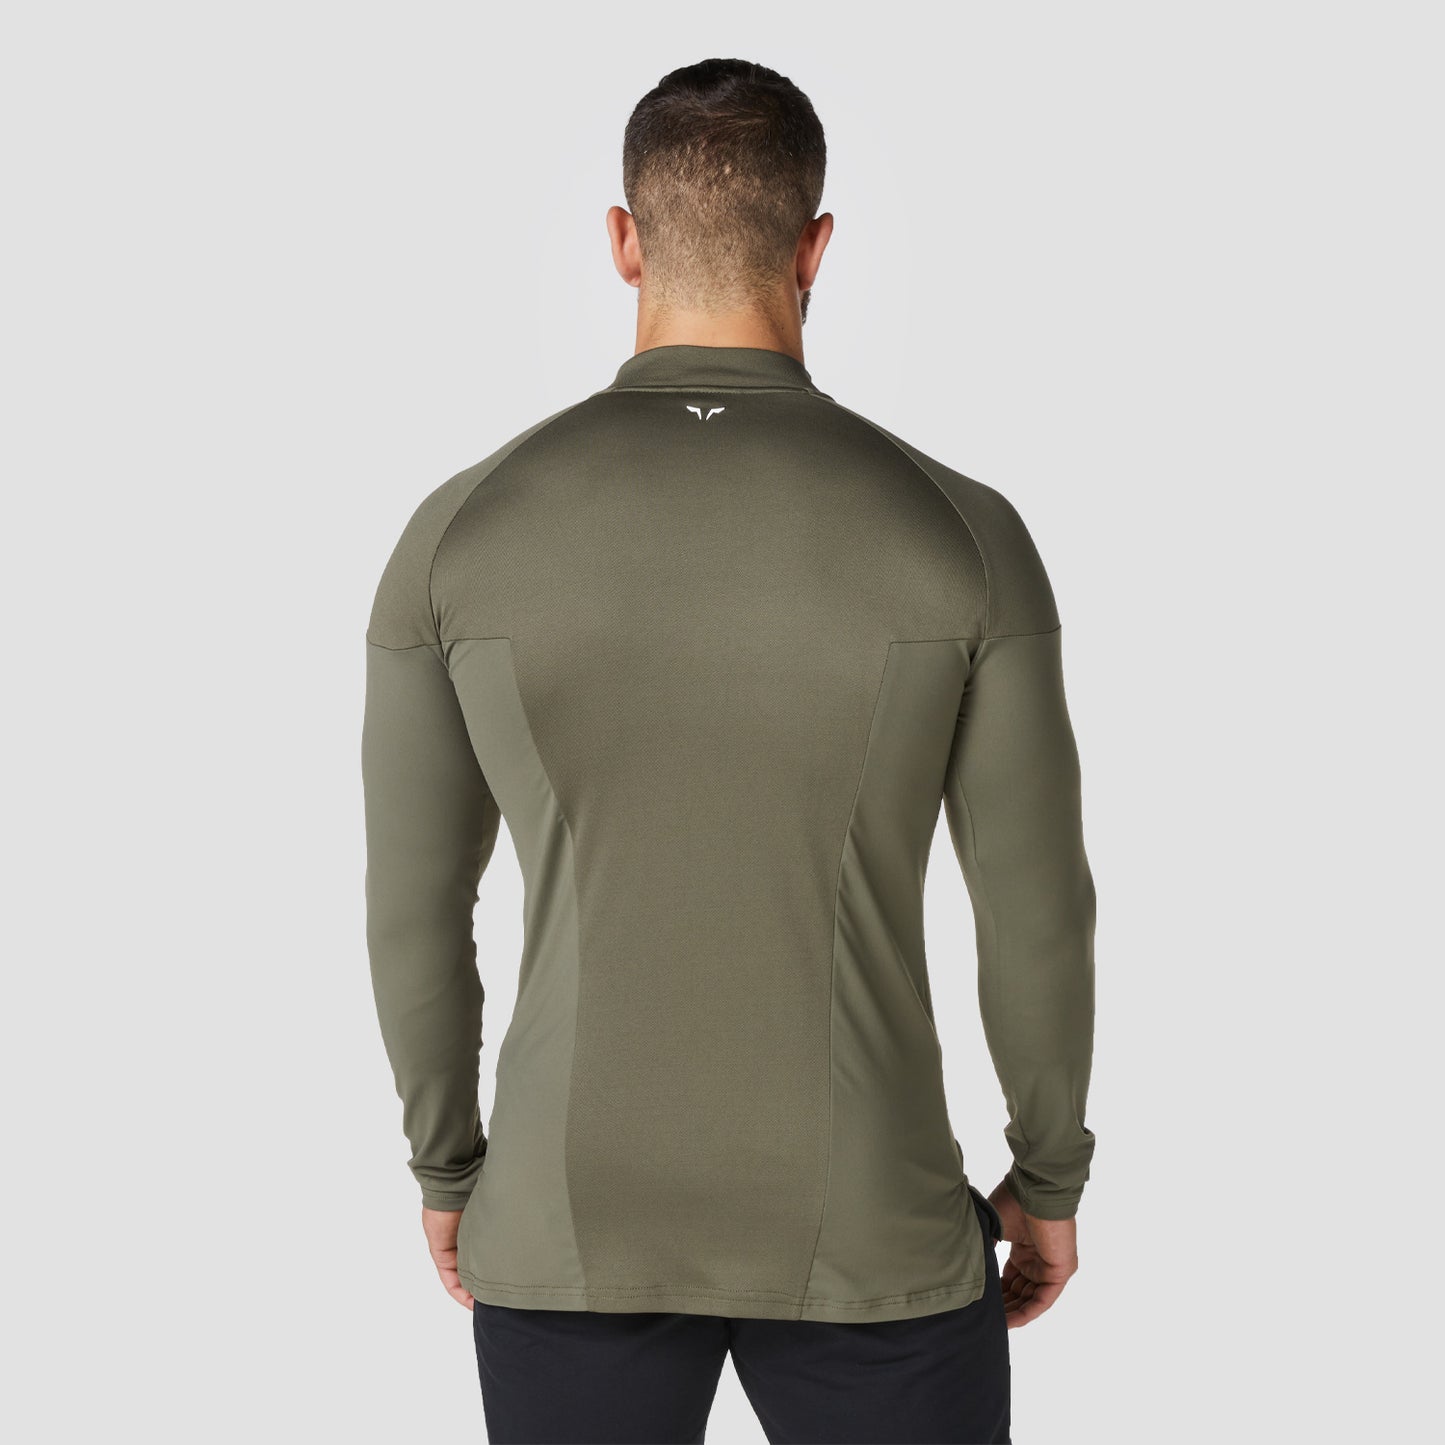 squatwolf-running-tops-for-men-core-running-top-khaki-long-sleeves-gym-wear